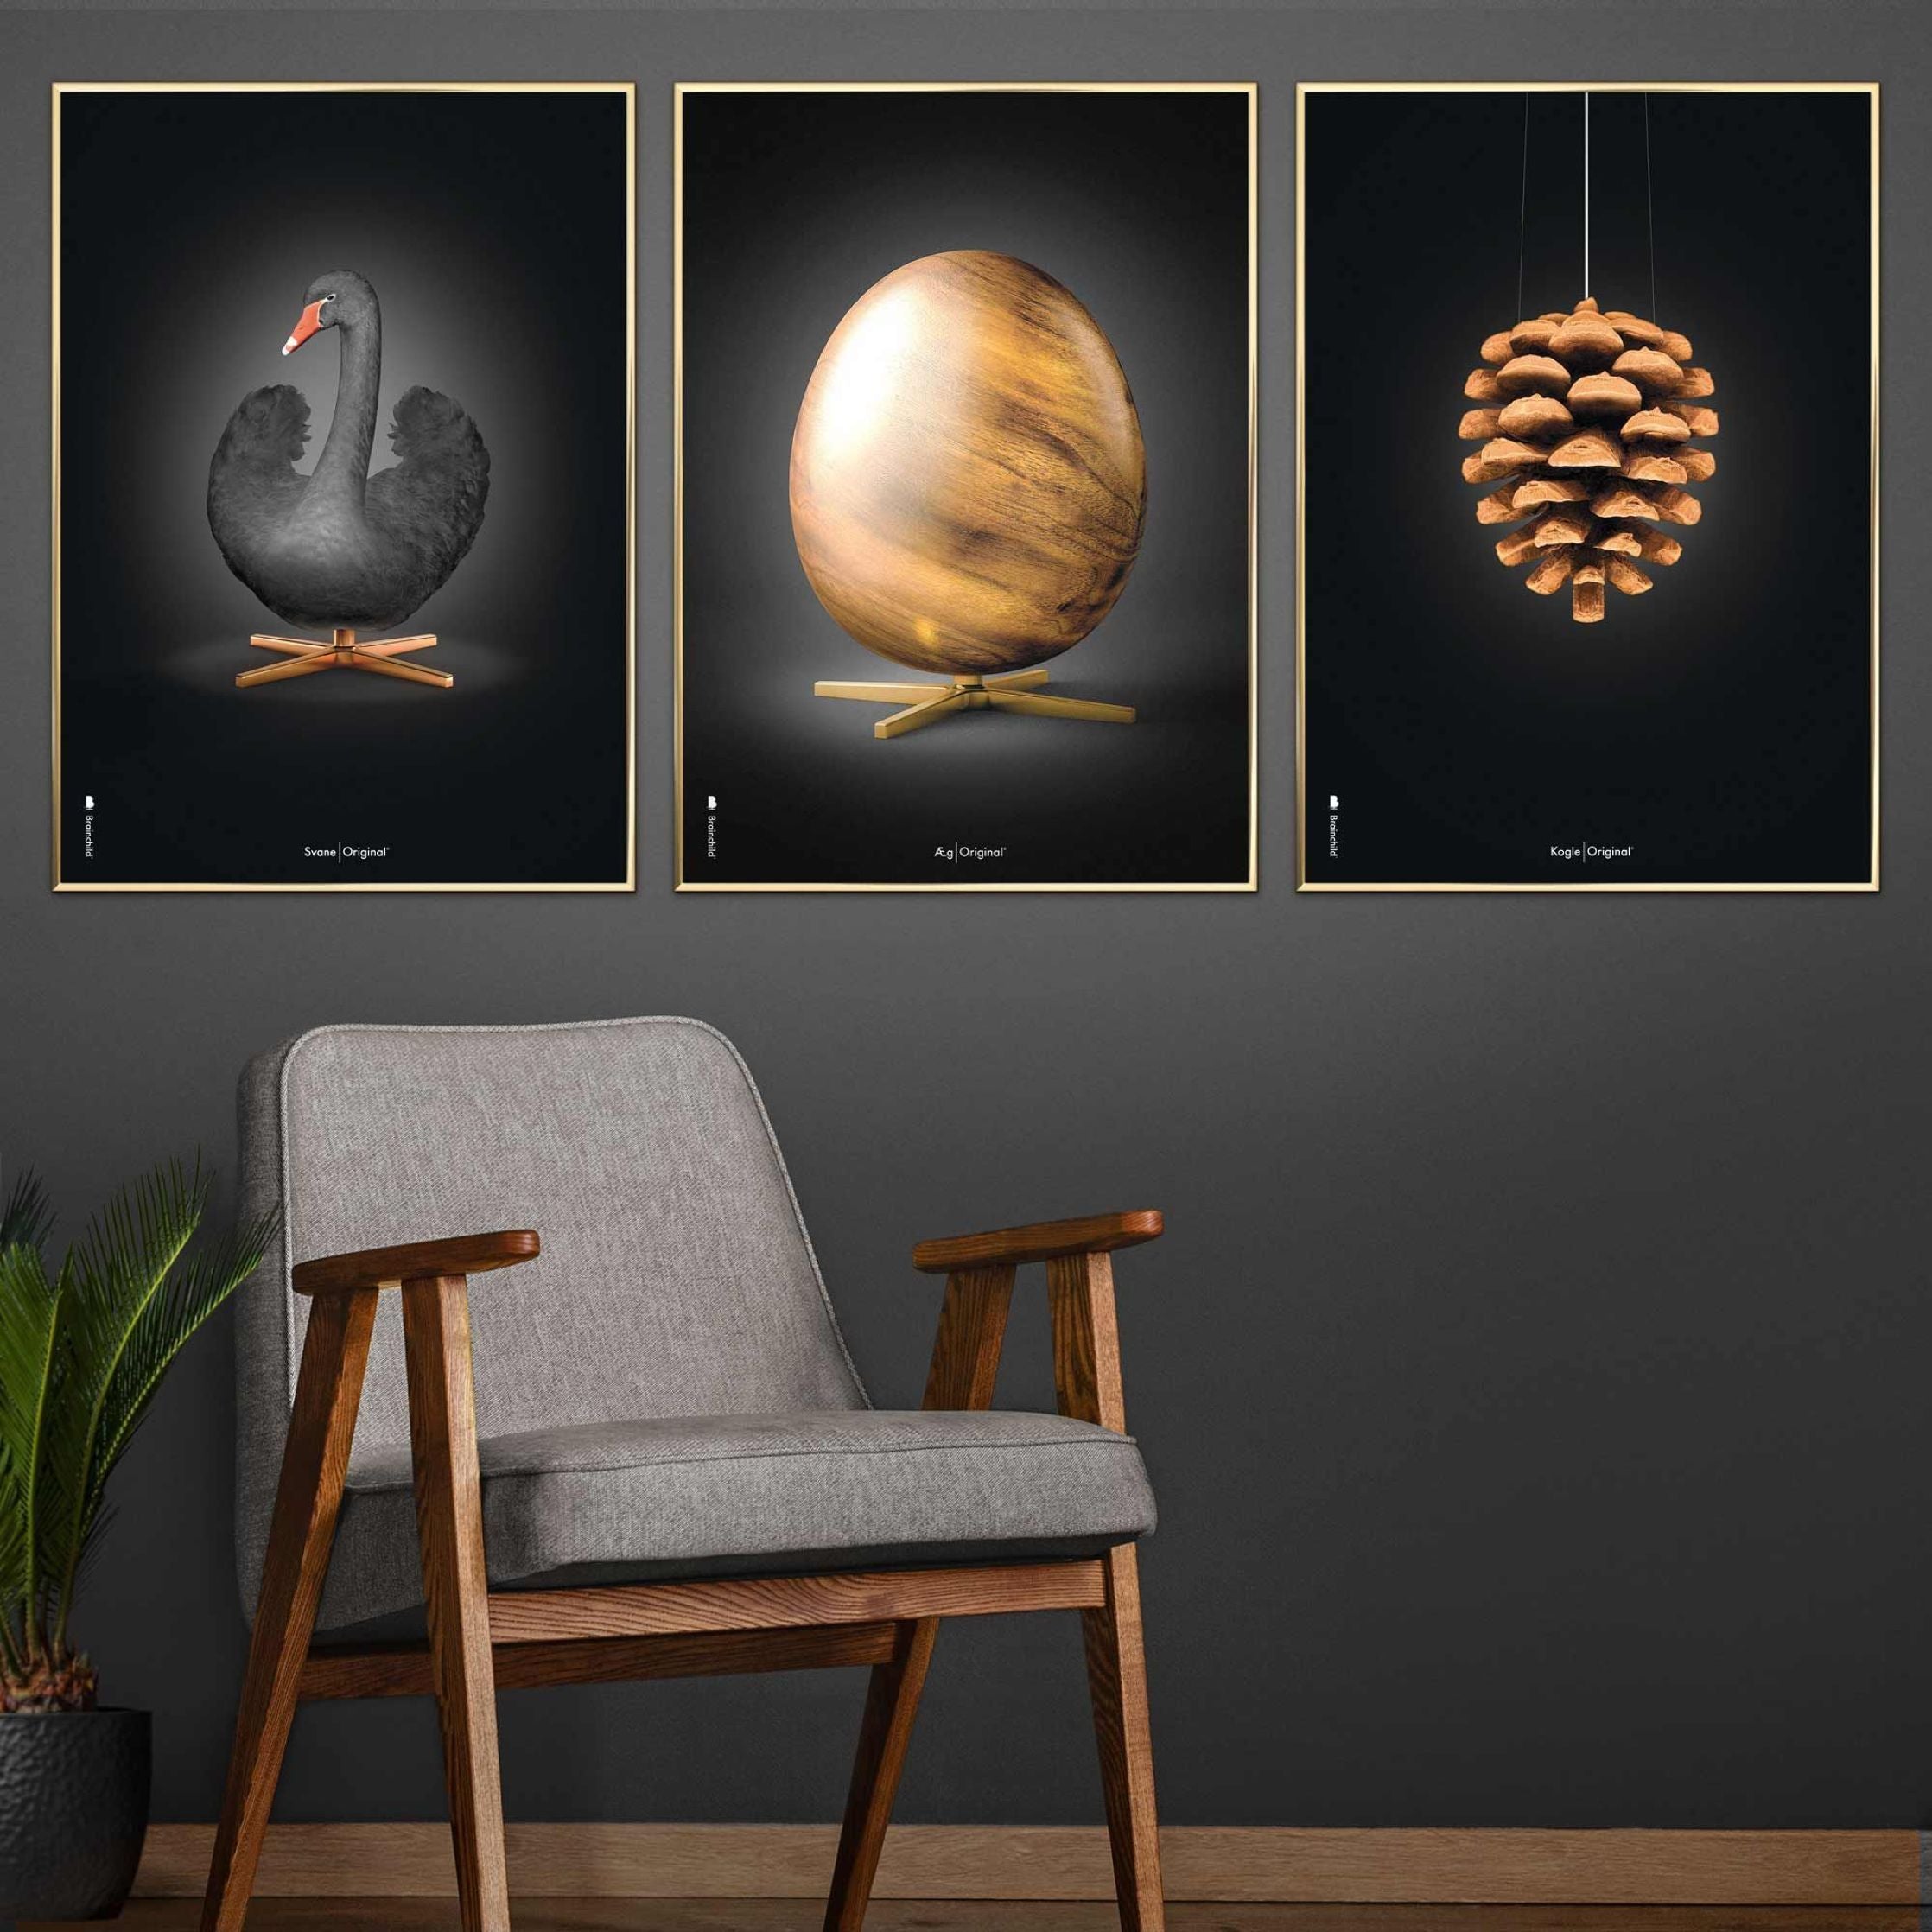 Brainchild Eierfiguren Poster, Rahmen aus dunklem Holz A5, schwarz